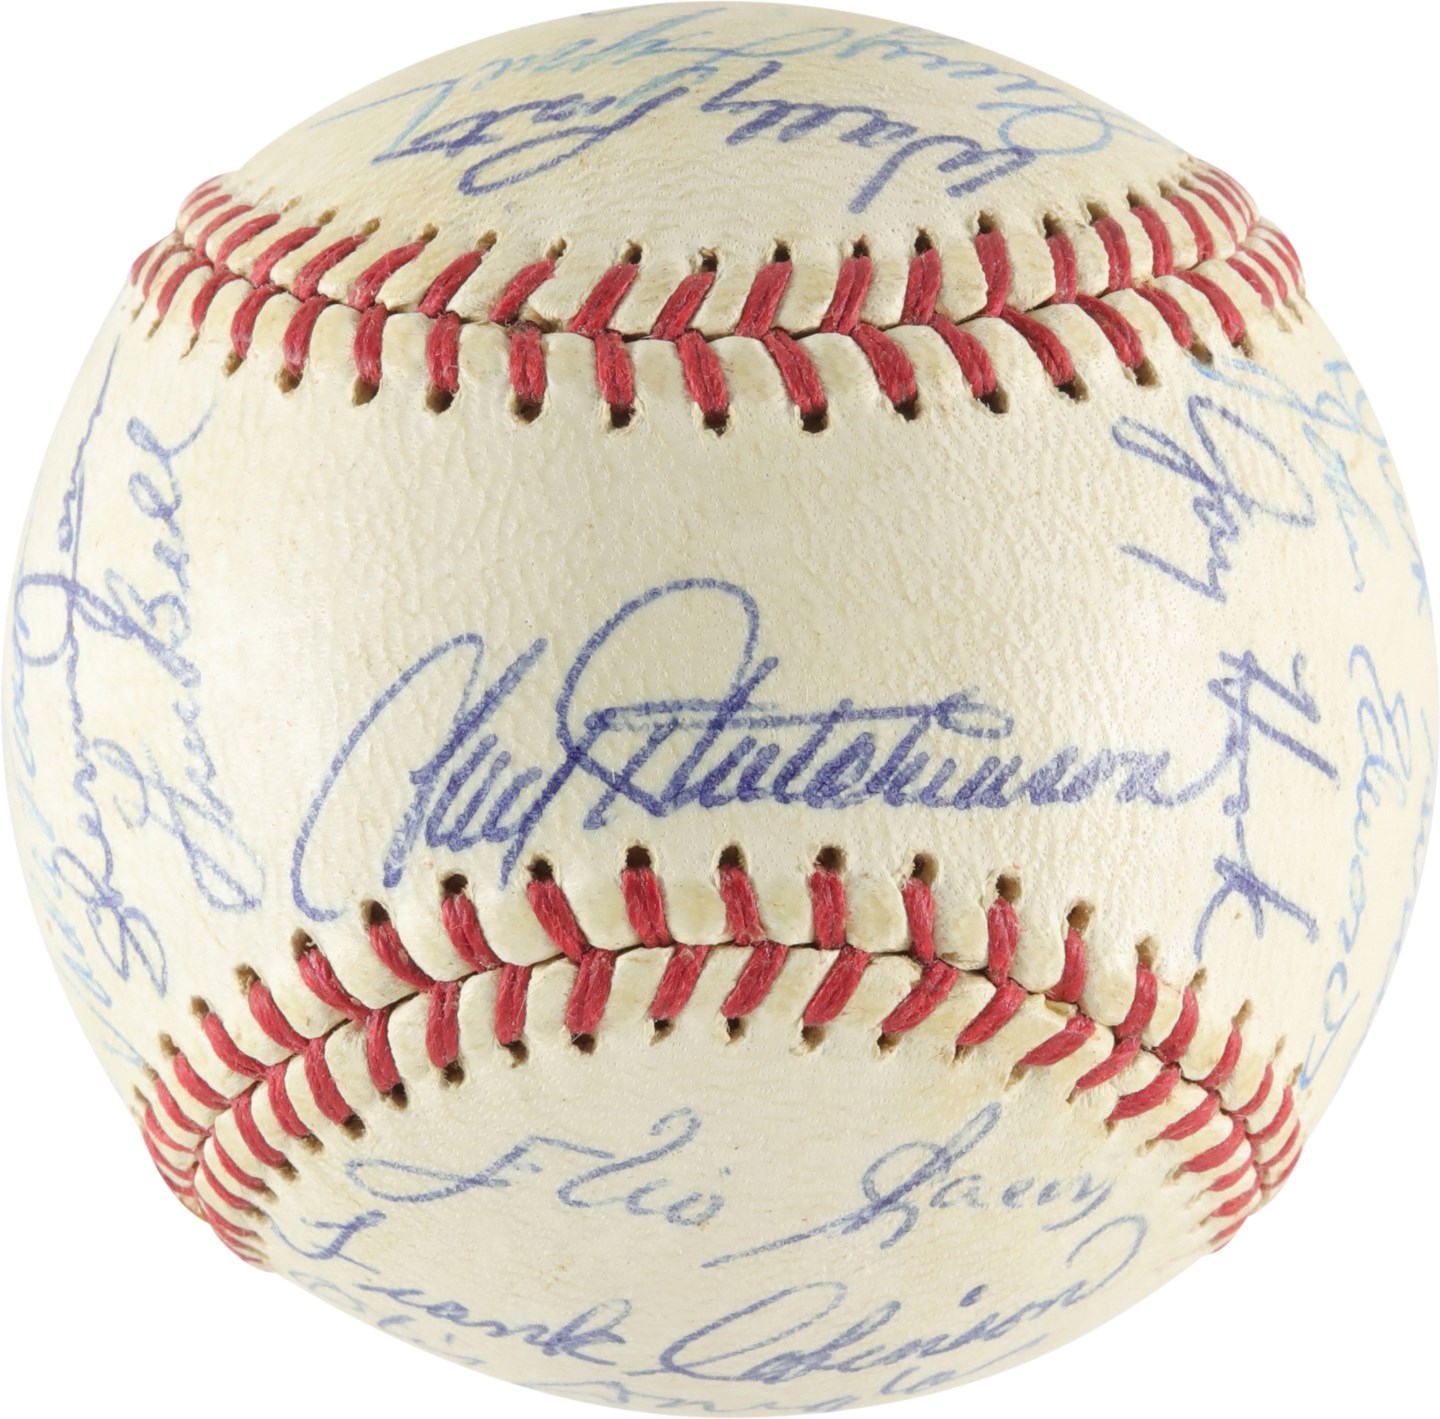 - Beautiful 1961 National League Champion Cincinnati Reds Team-Signed Baseball (25 Autos)